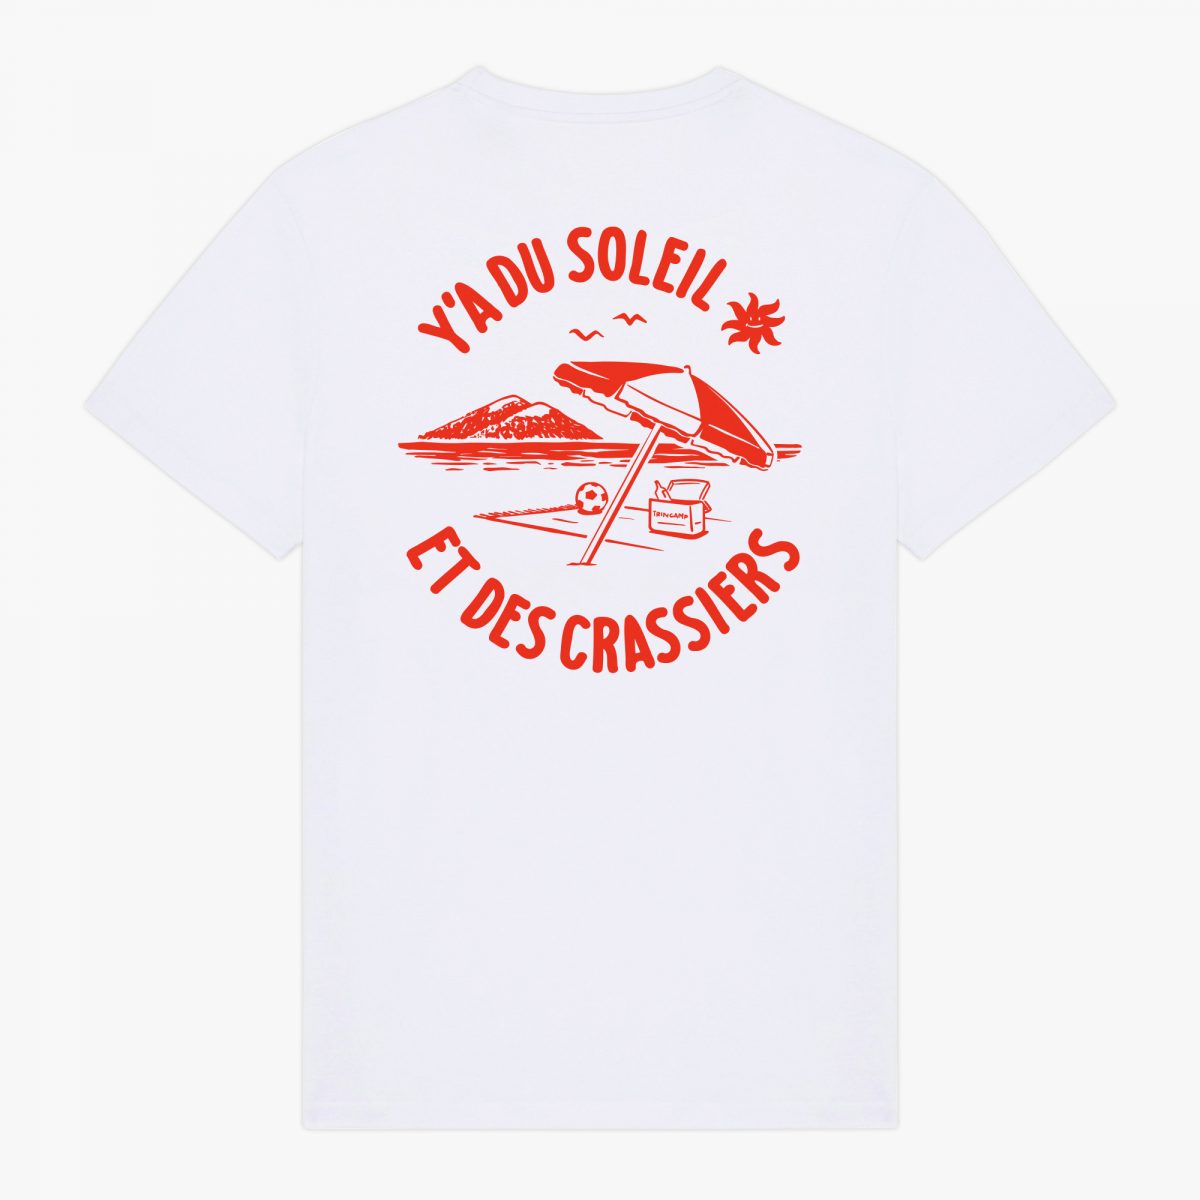 T-shirt Sainté Beach rouge